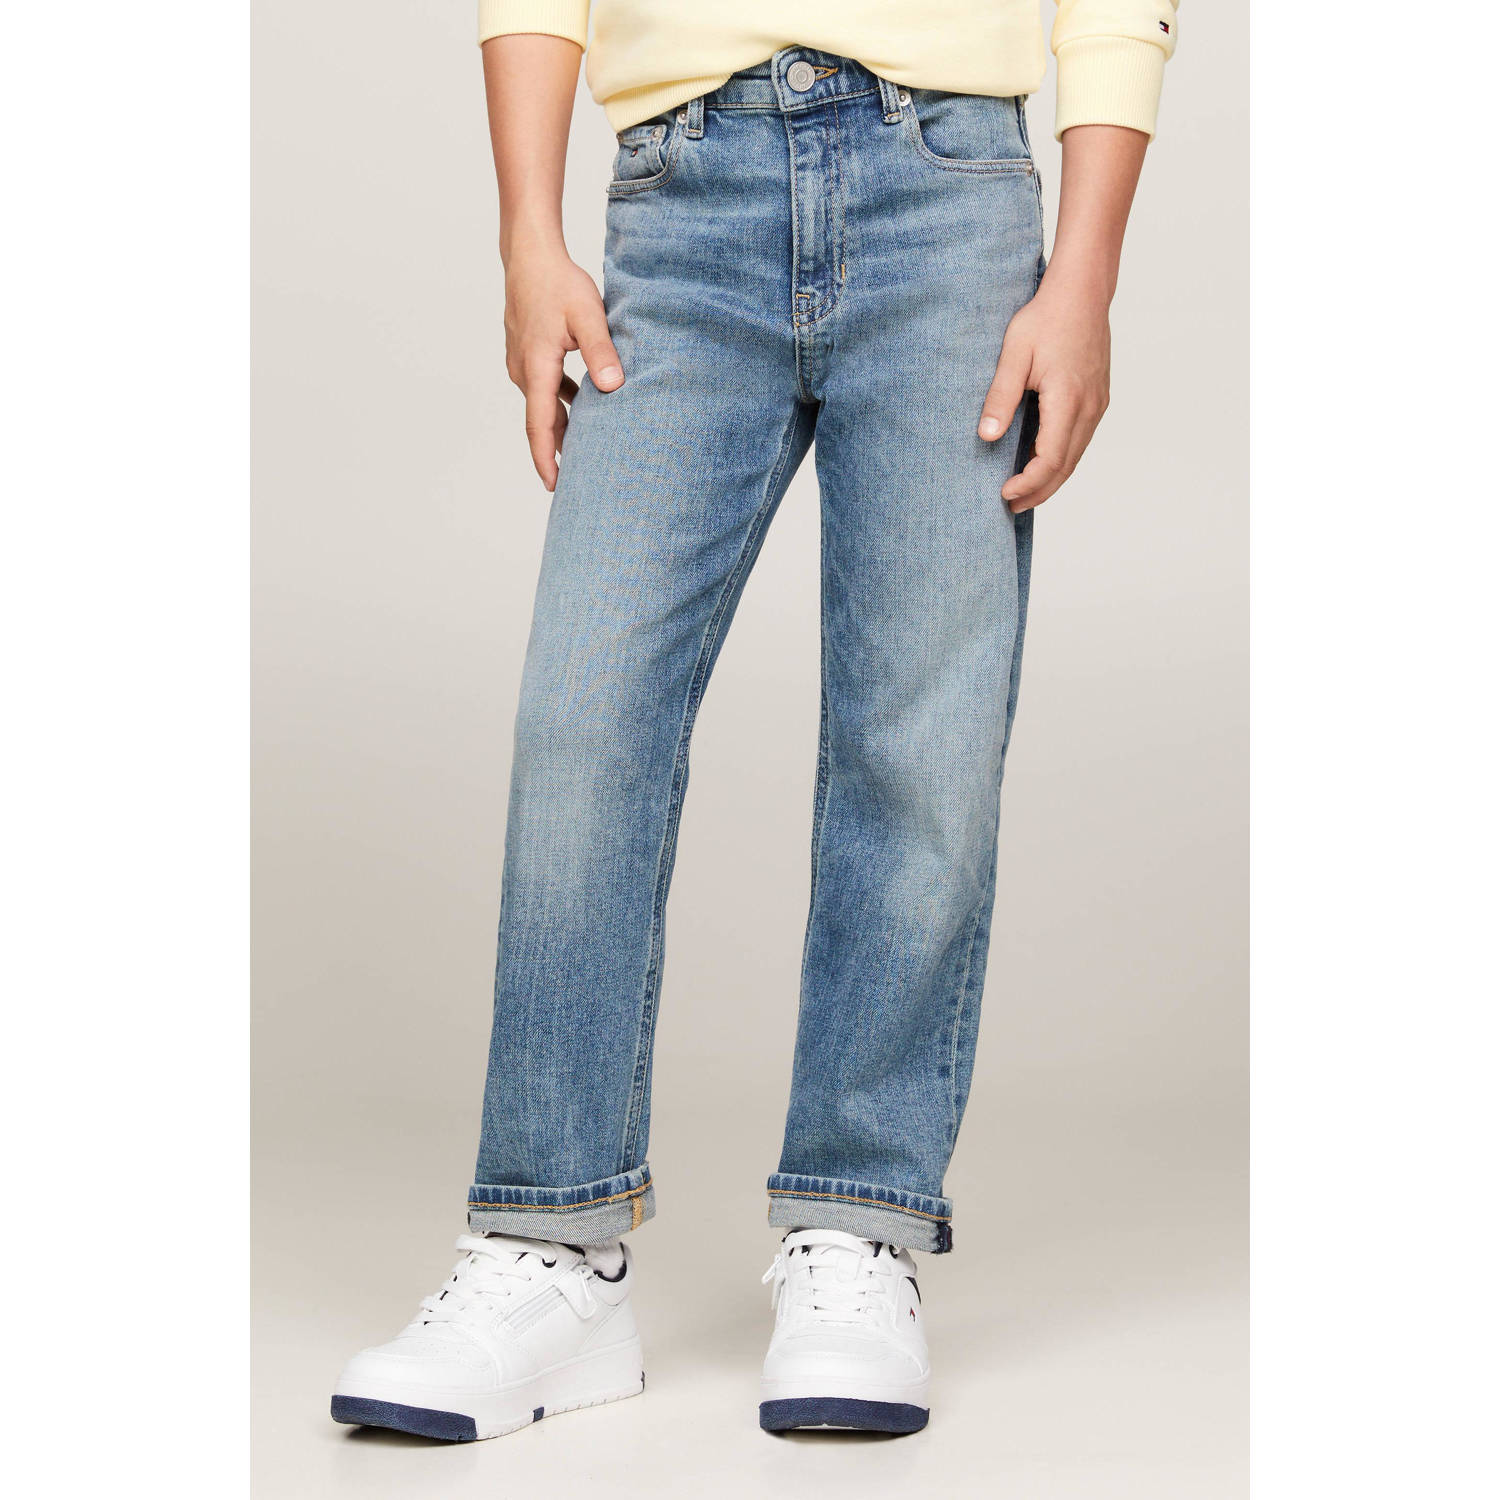 Tommy Hilfiger straight fit jeans vintage